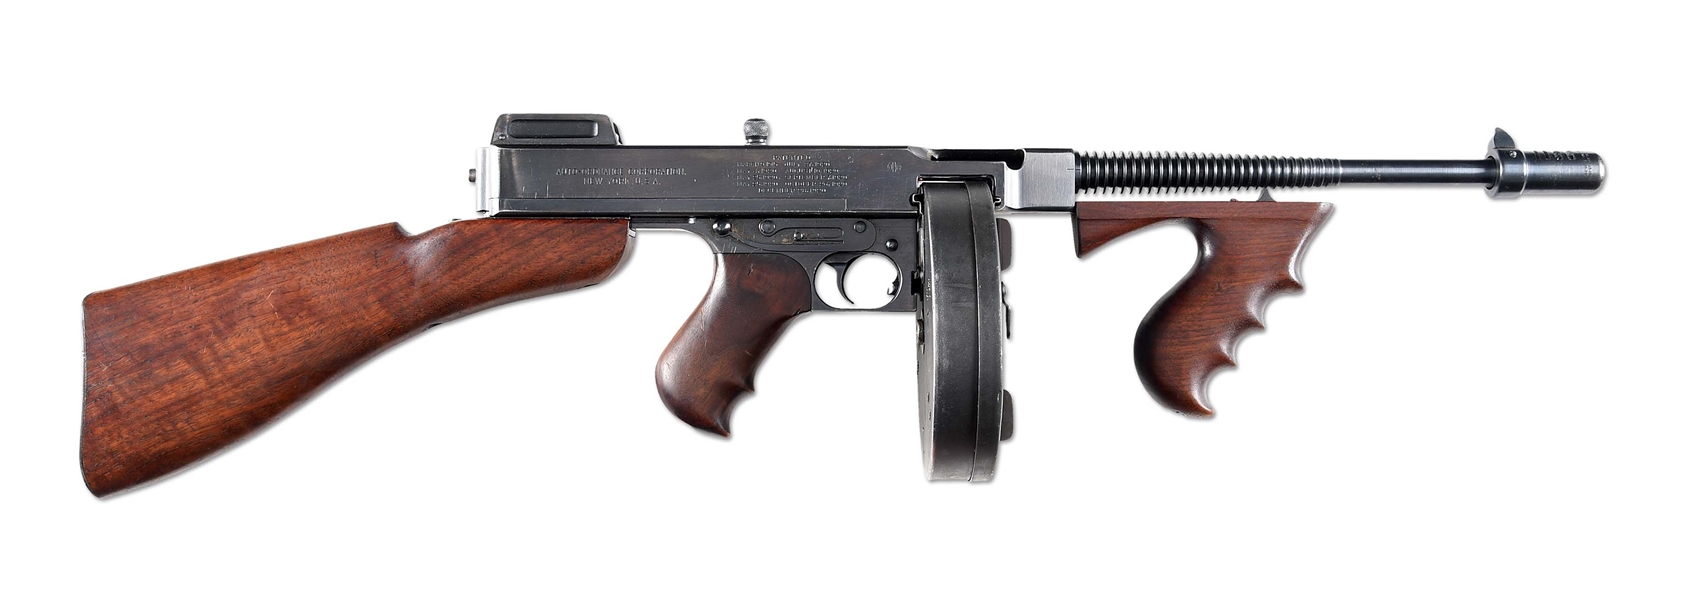 (N) EXTREMELY FINE COLT THOMPSON 1921/28 NAVY OVERSTAMP MACHINE GUN IN CASE WITH DRUM & MAGAZINES (CURIO & RELIC).